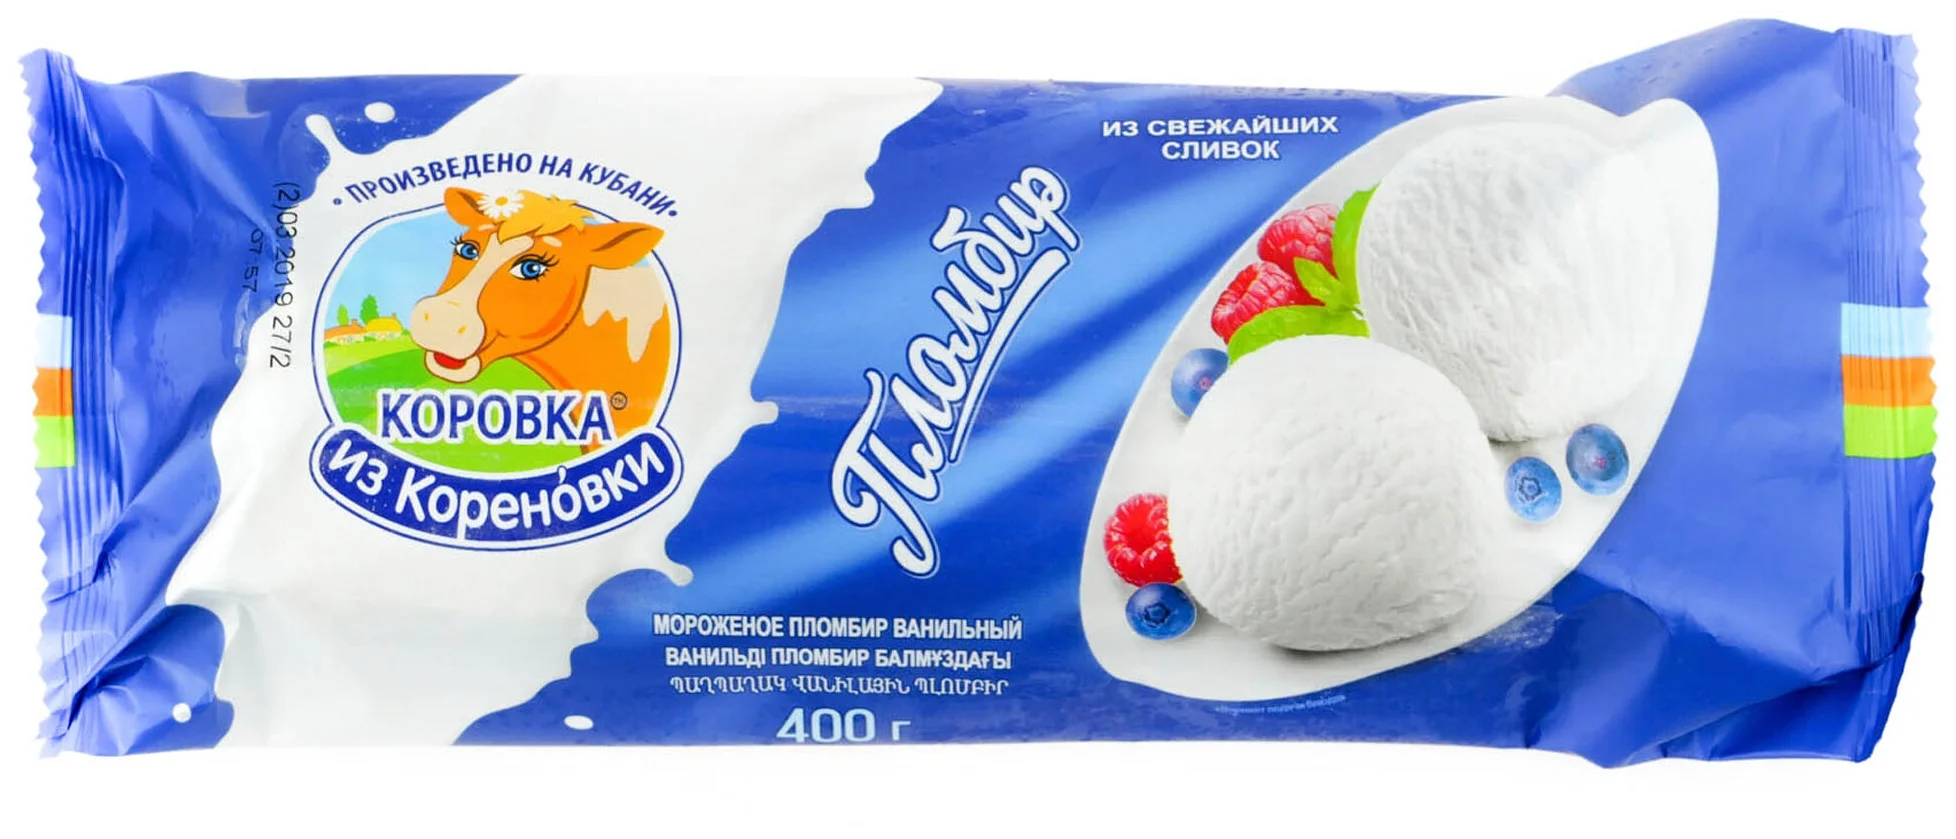 Мороженое Пломбир ванильный 400гр. Коровка из Кореновки бзмж.